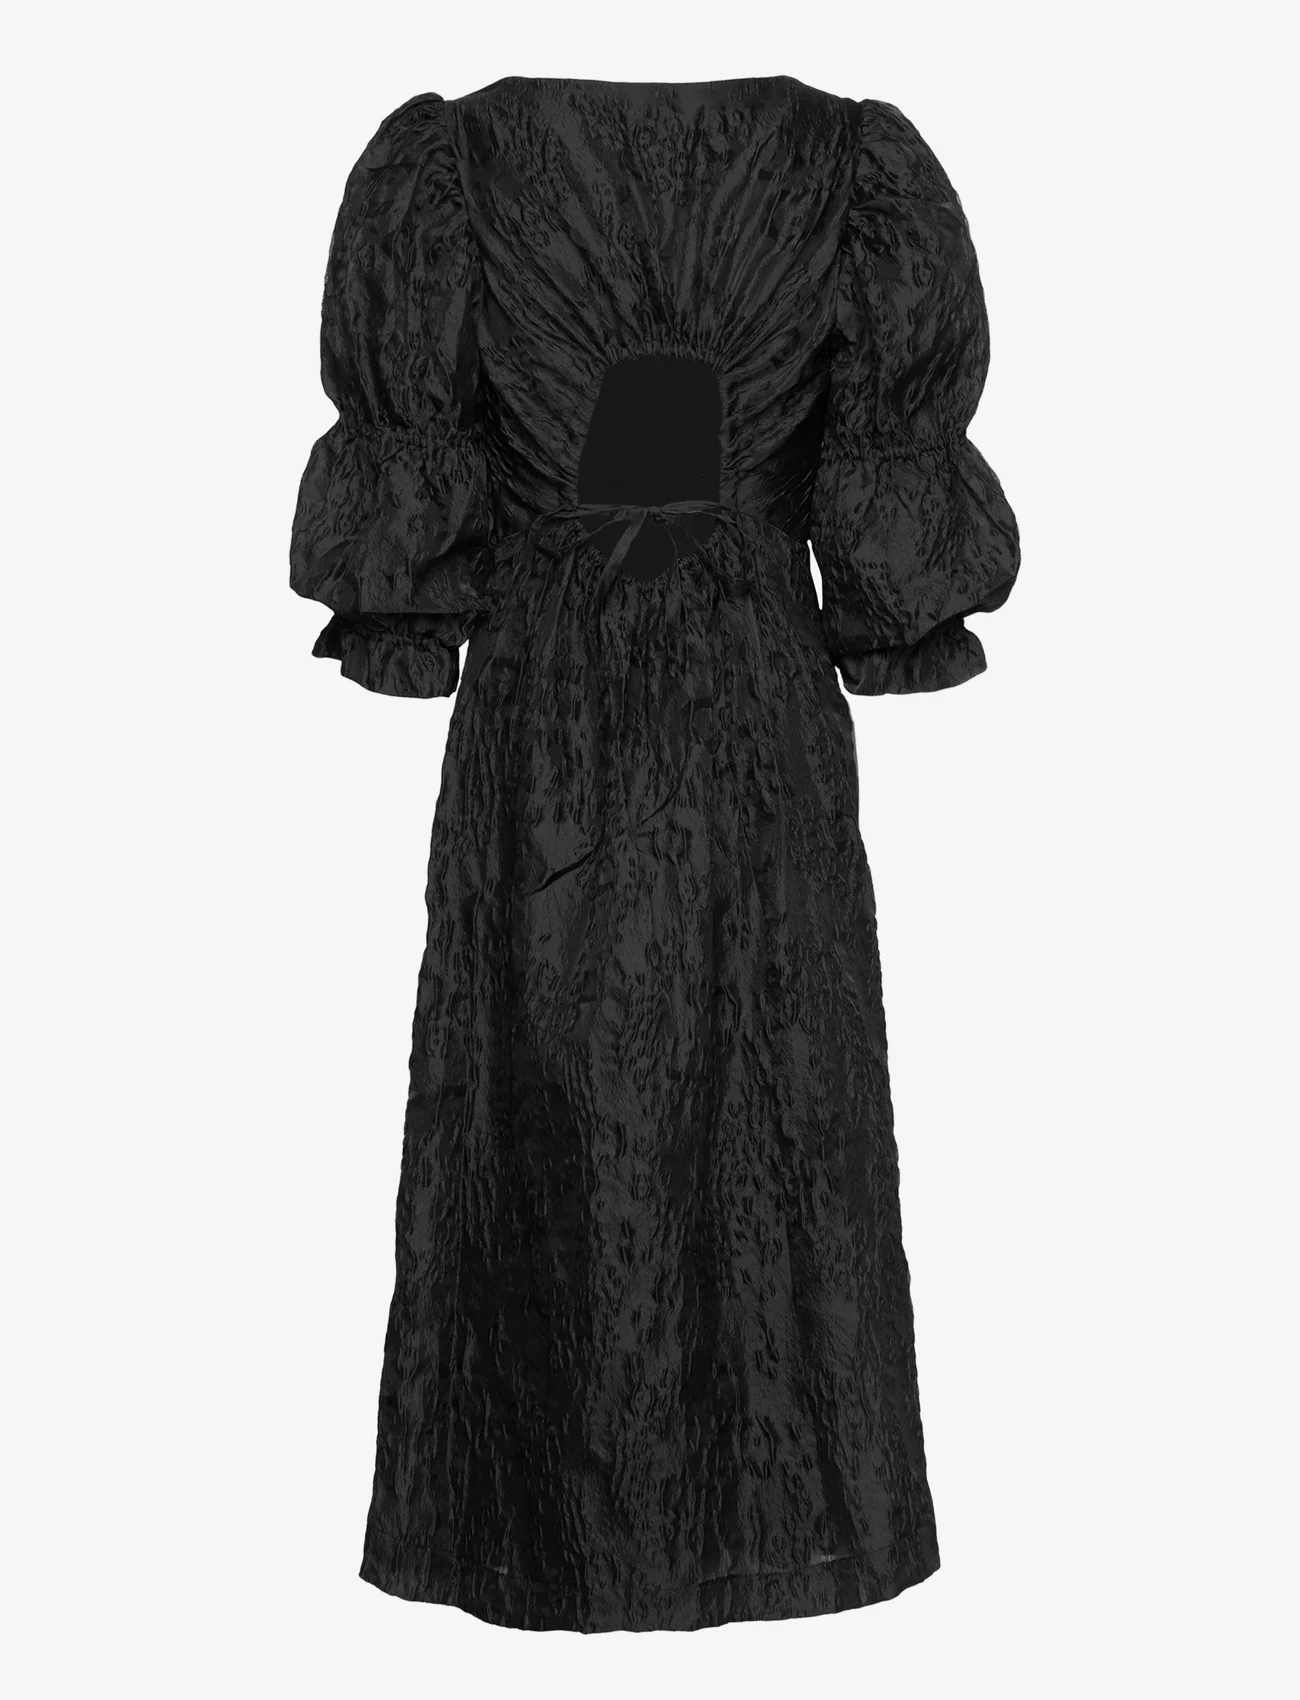 Munthe - DOLCINA - midi kjoler - black - 1